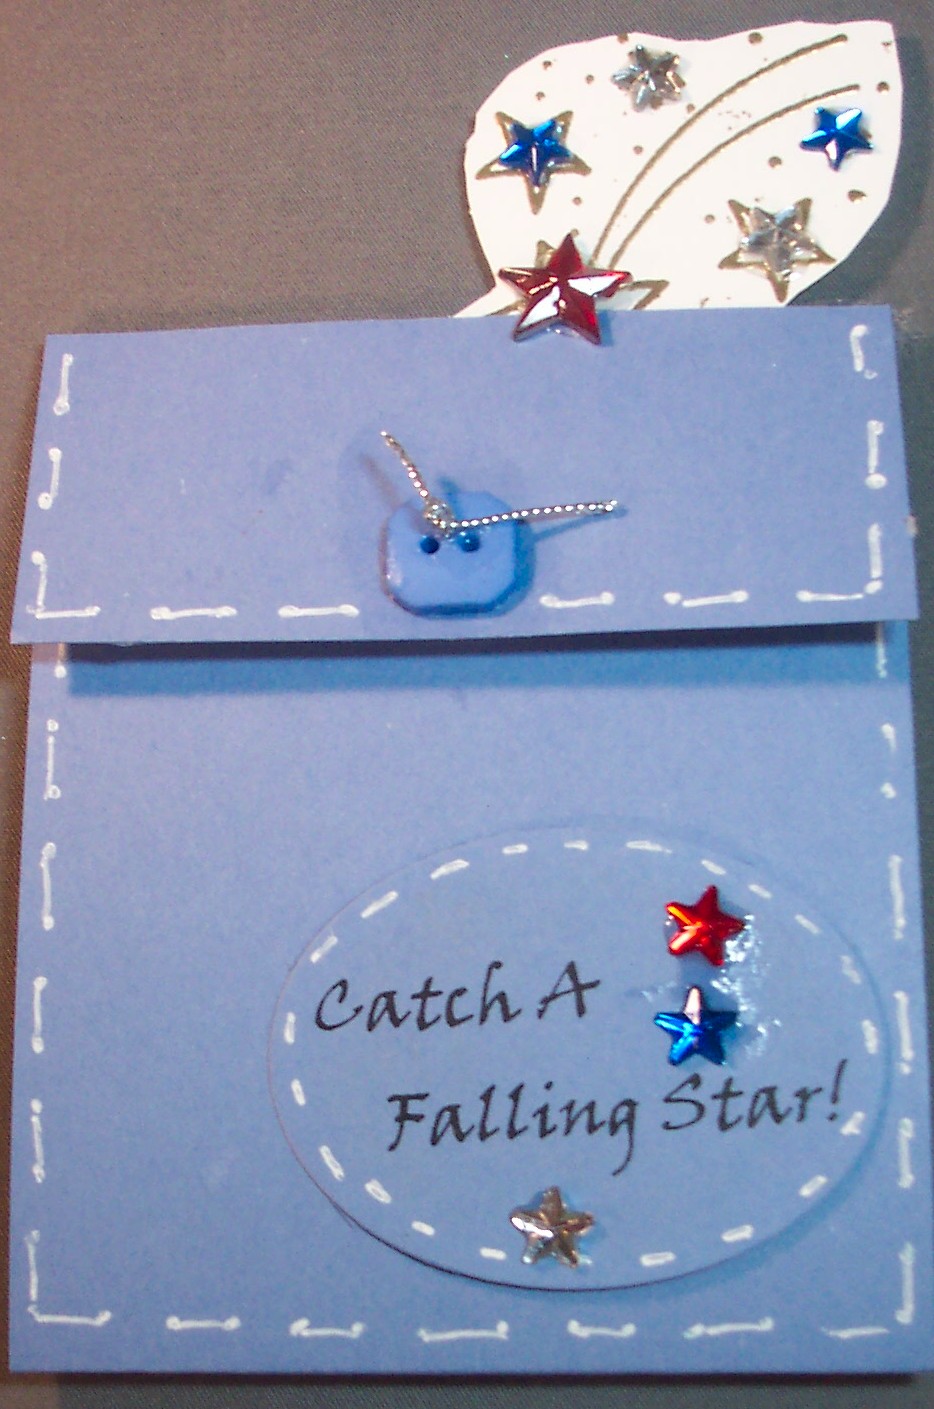 [Make+a+Wish-Catch+a+falling+star.jpg]